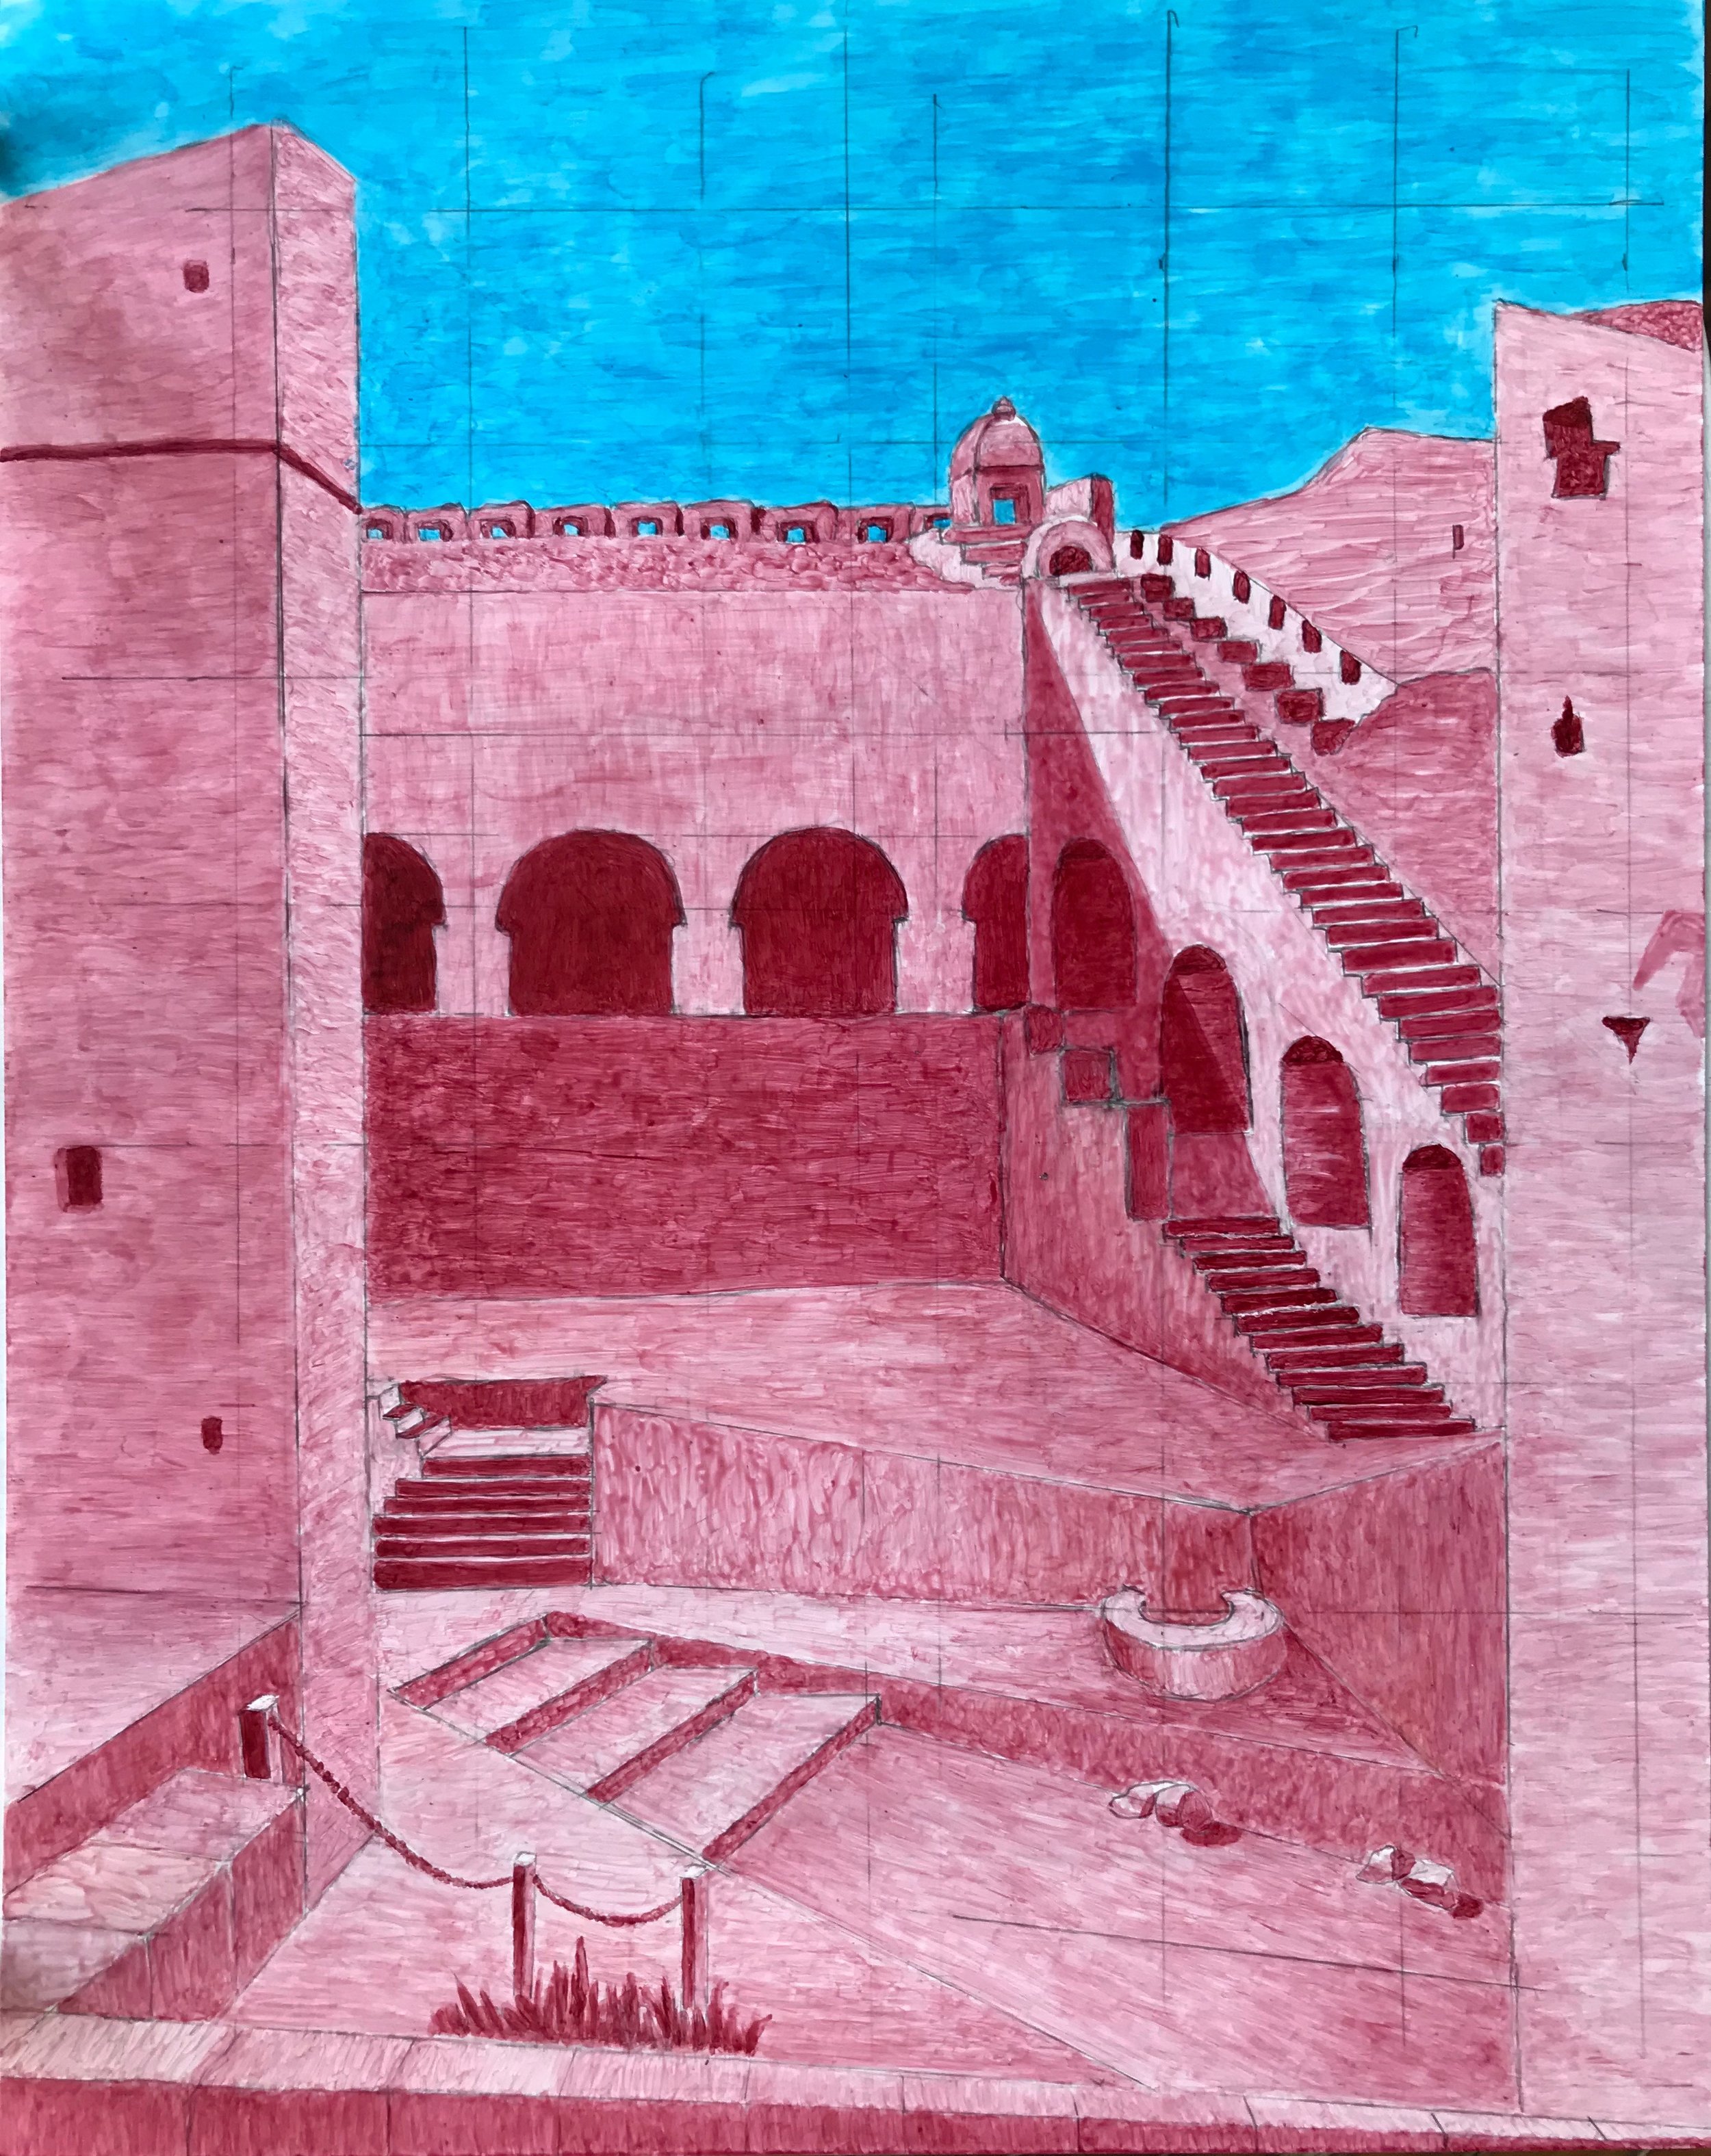 Palamidi Fortress